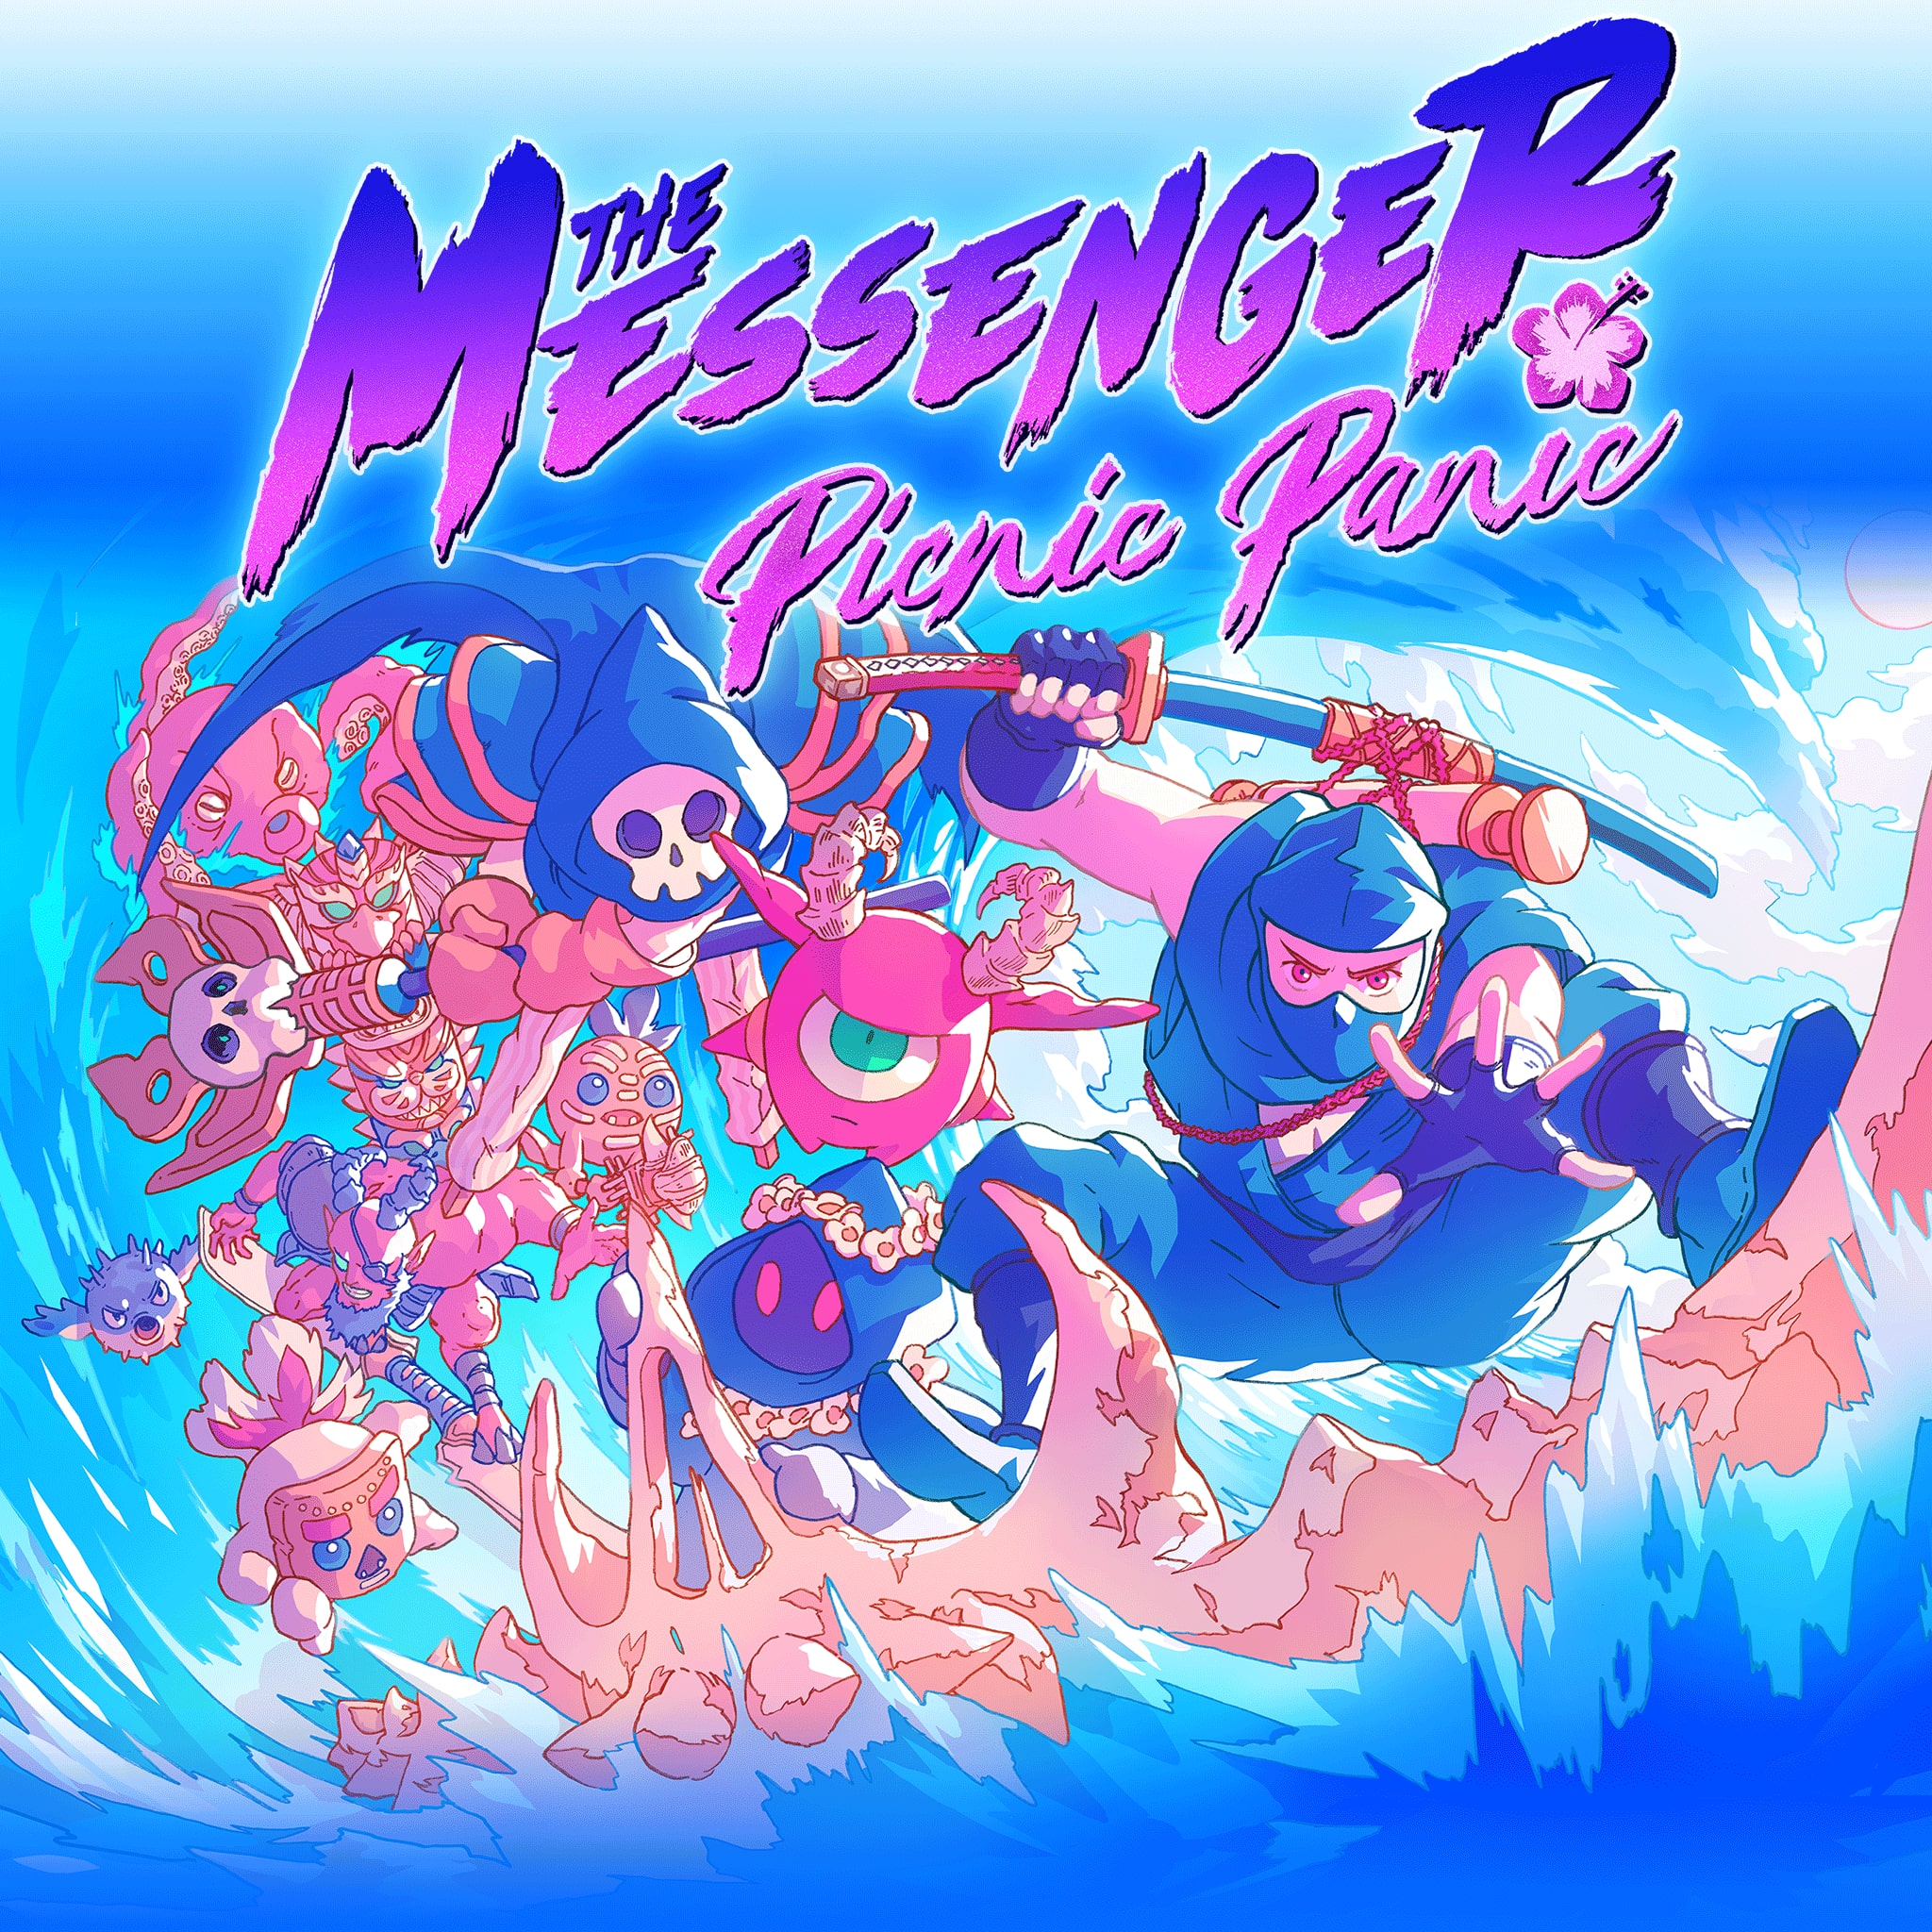 The Messenger - Picnic Panic (English/Korean/Japanese Ver.)